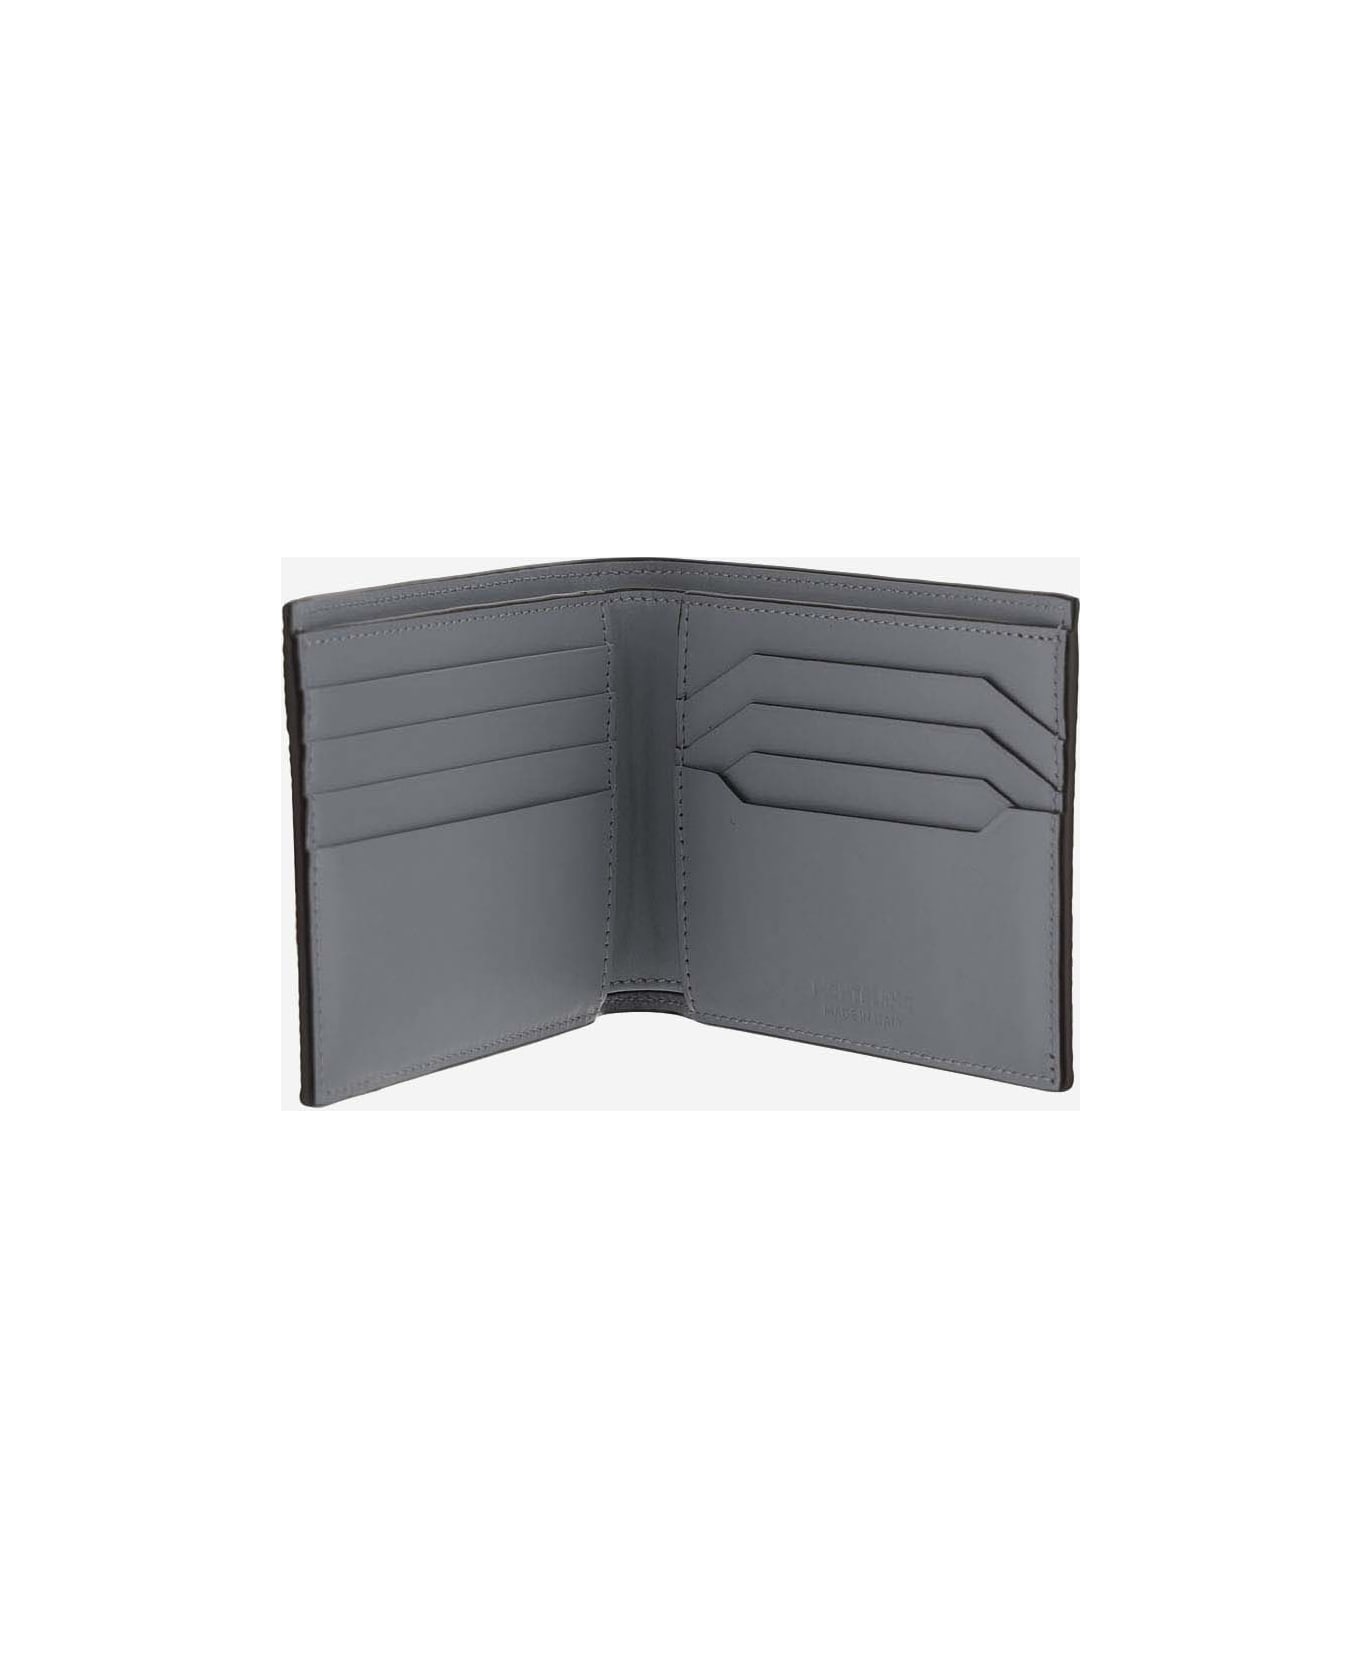 Montblanc Wallet 8 Compartments 4810 - Grey 財布